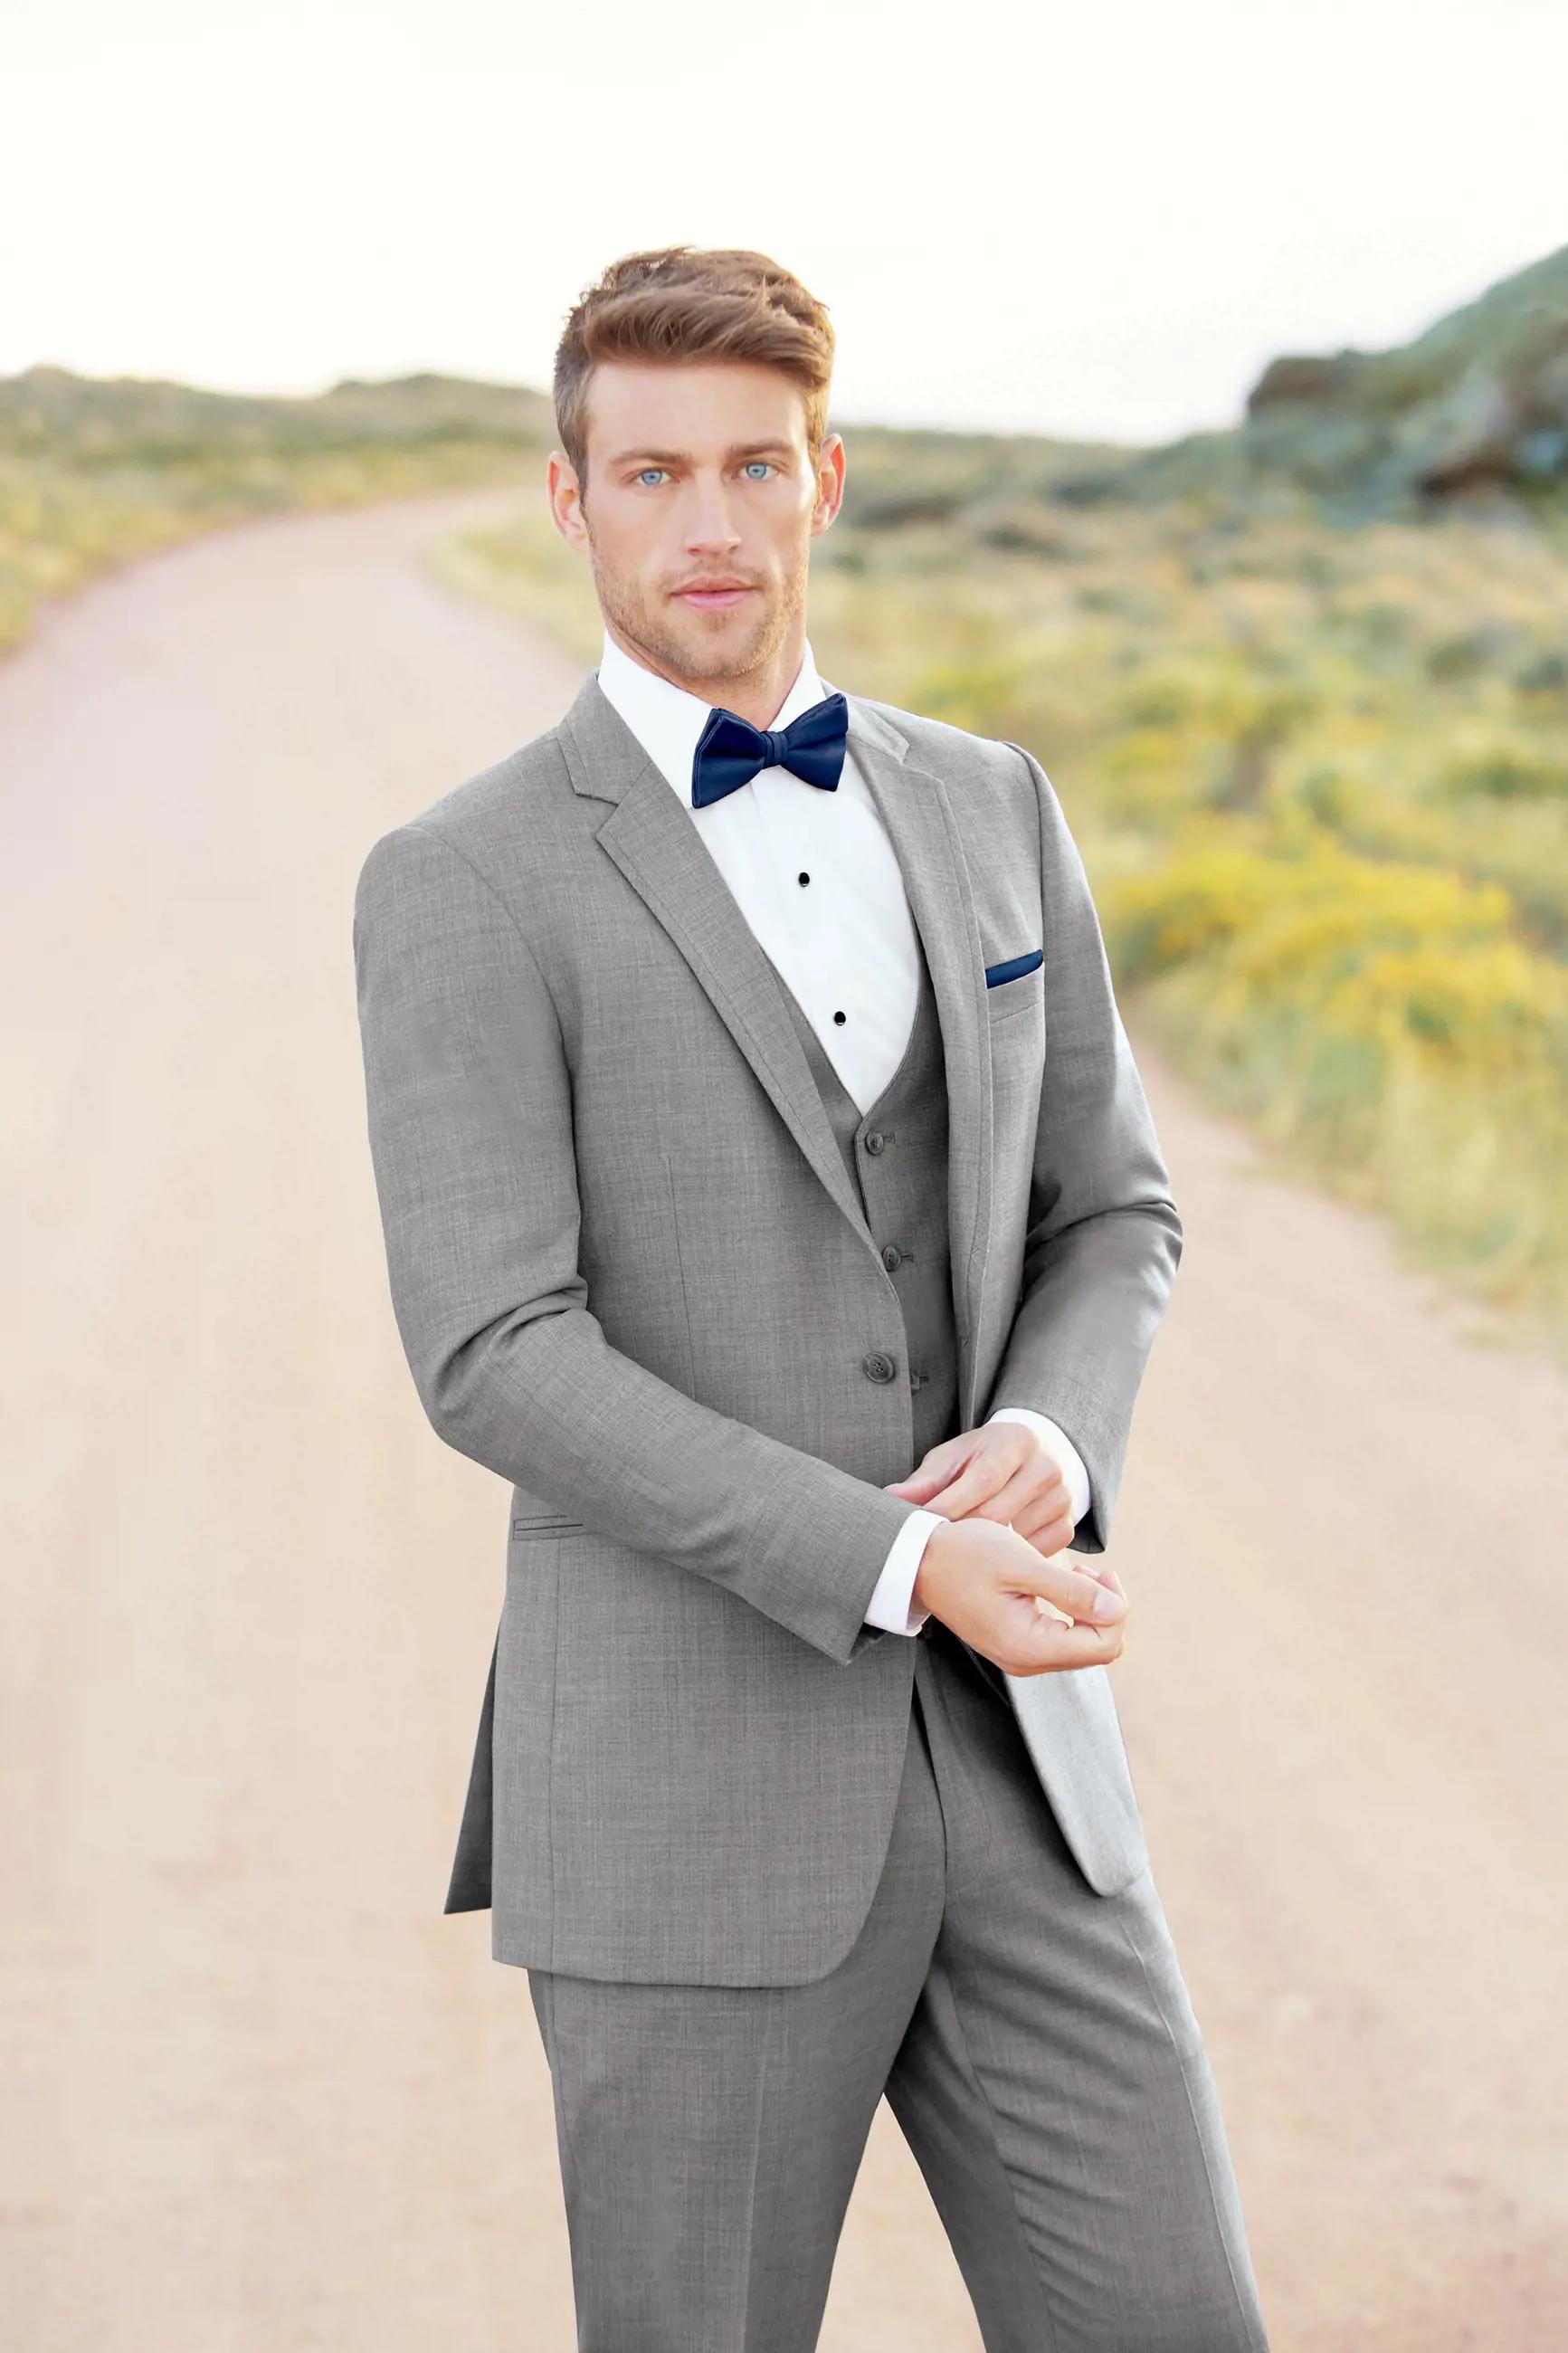 Model wearing a gray suit